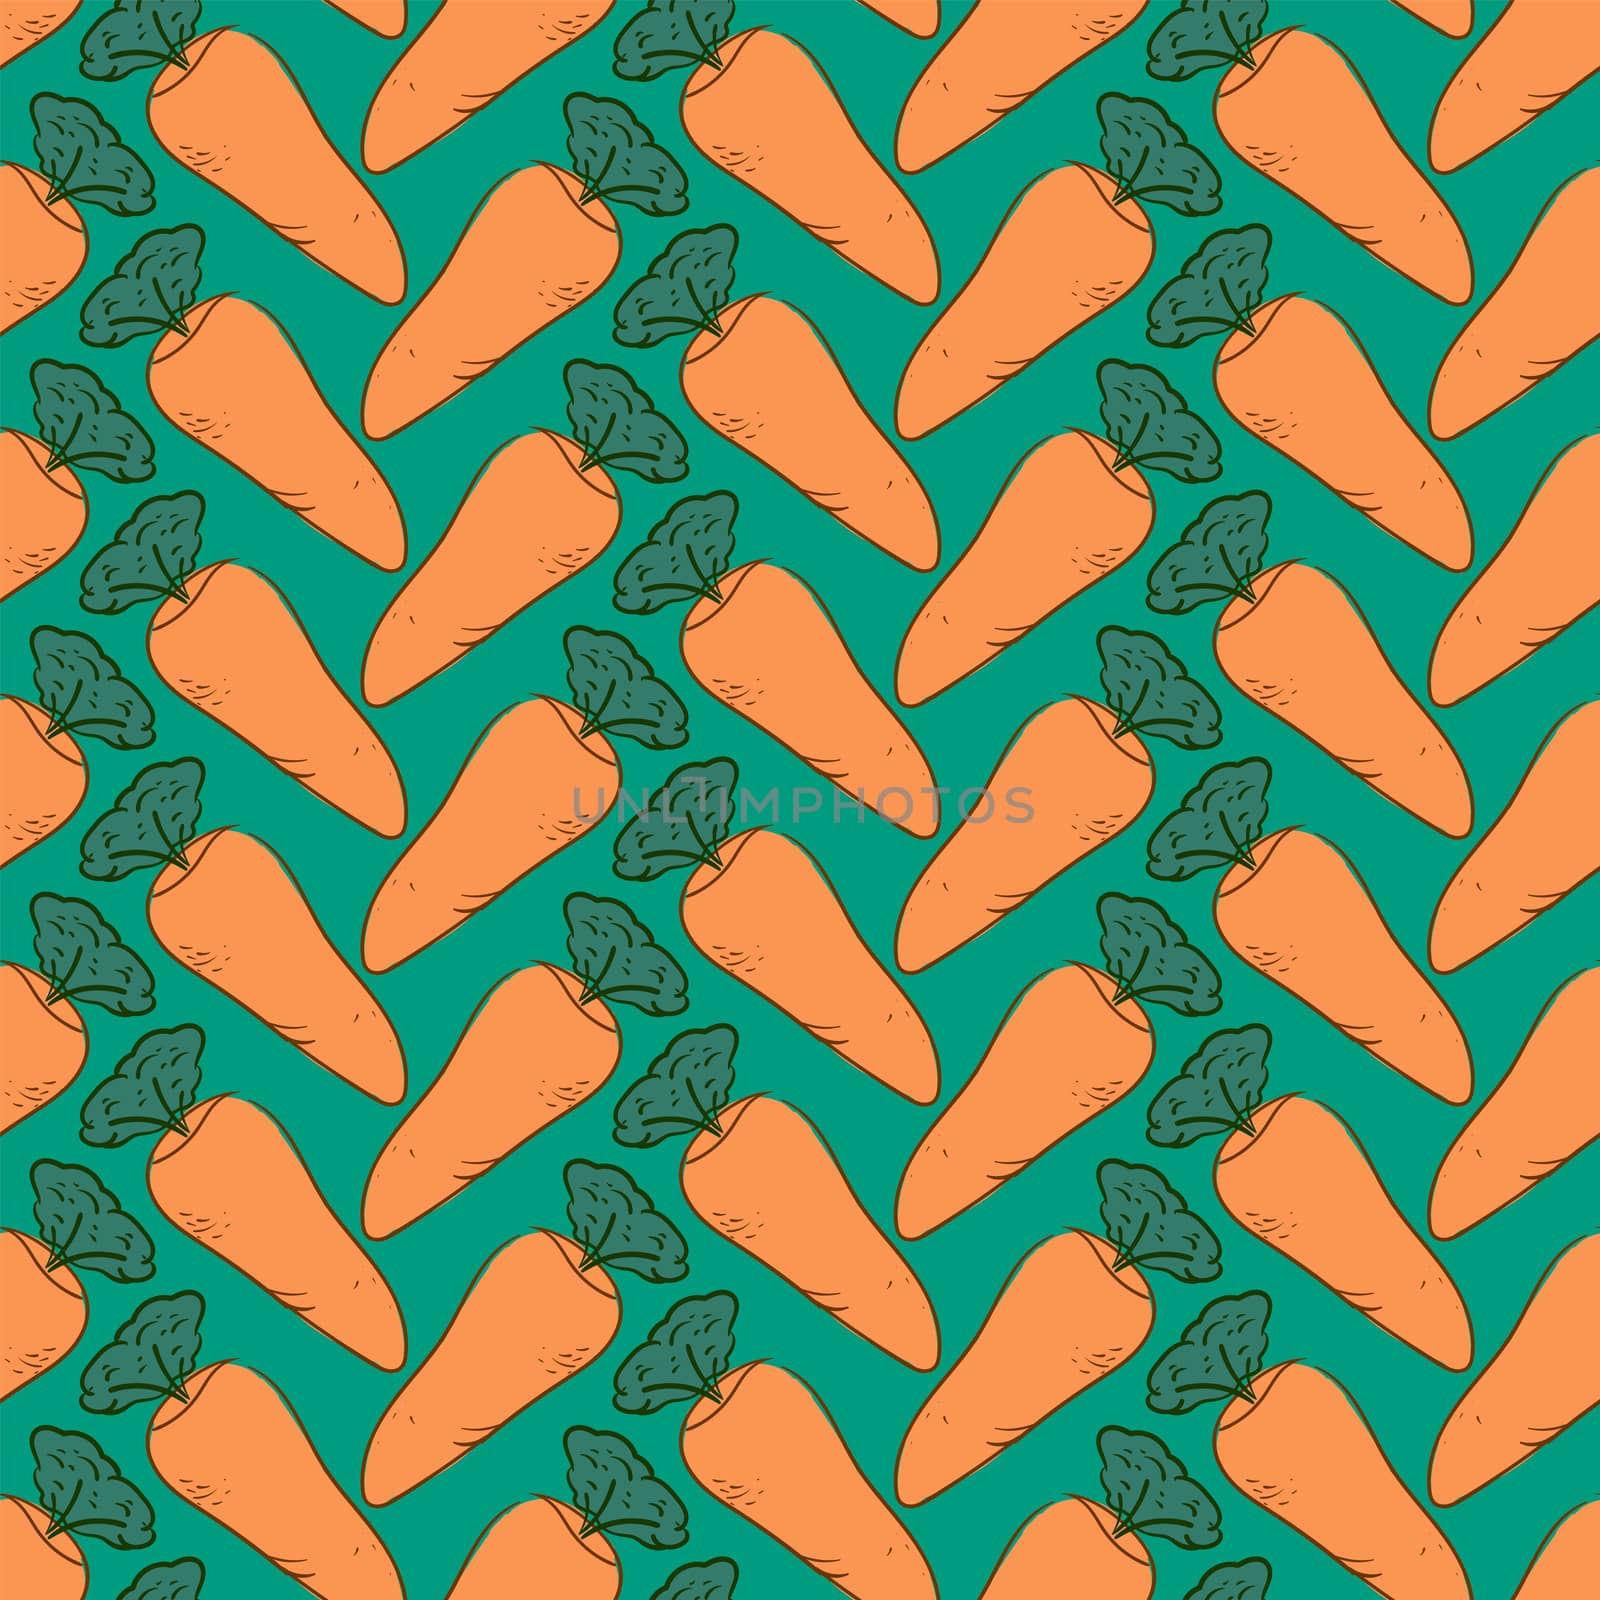 Carrots pattern , illustration, vector on white background by Morphart